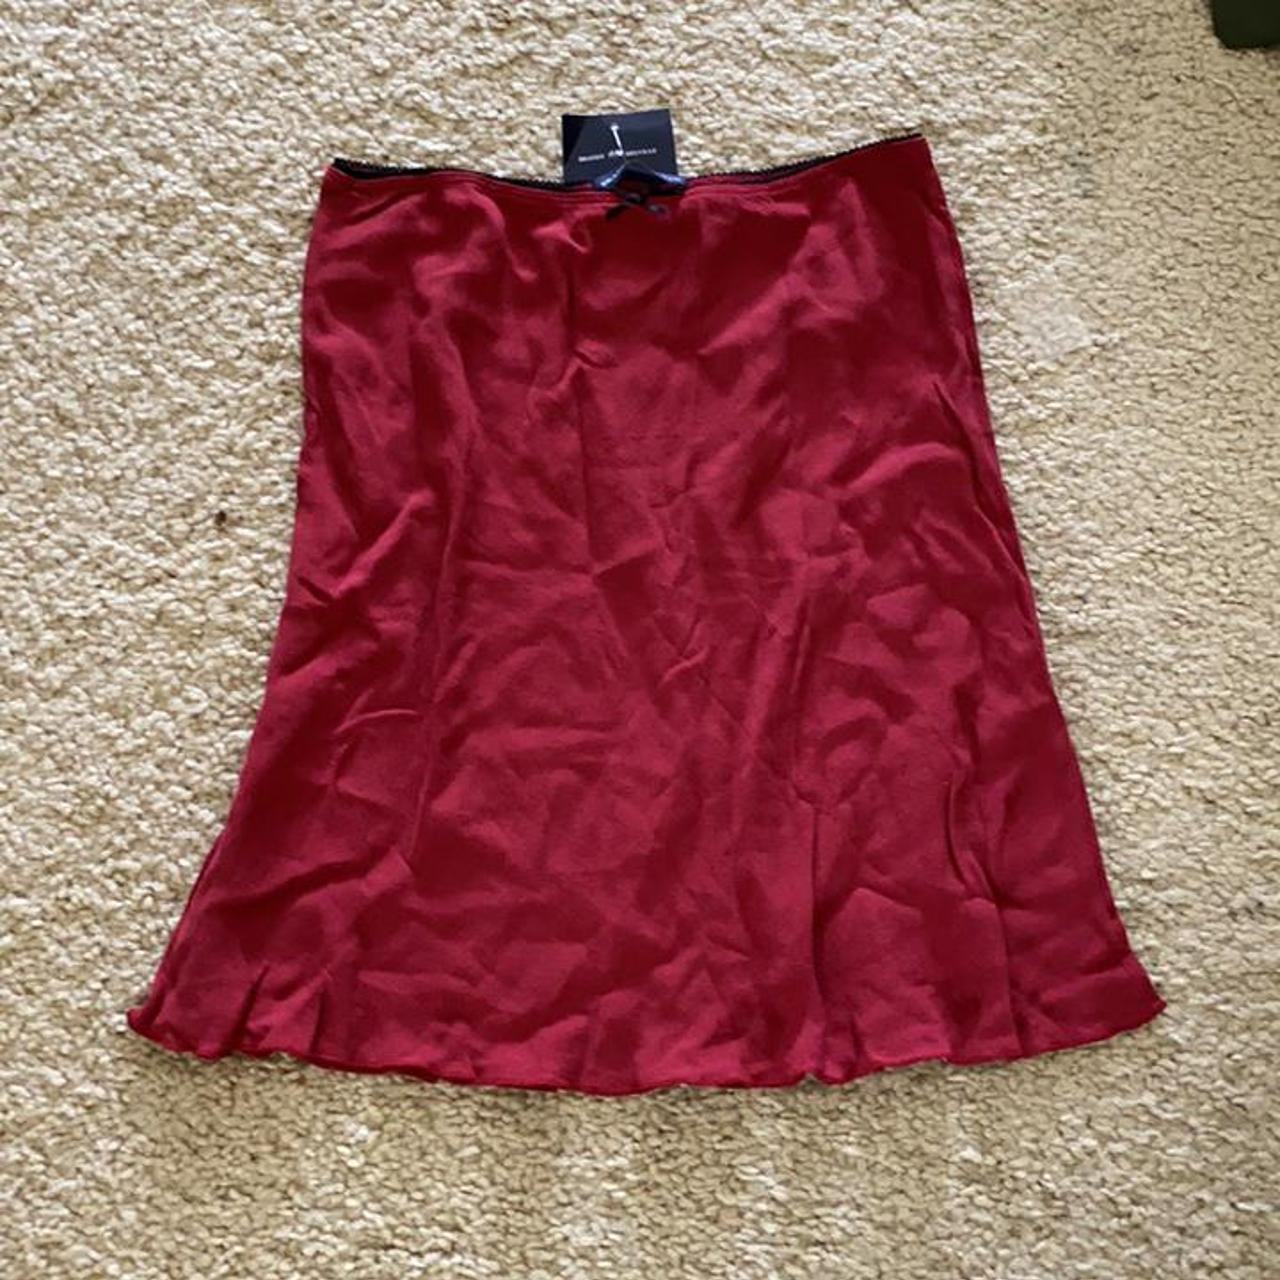 Brandy Melville red sephira skirt - Depop